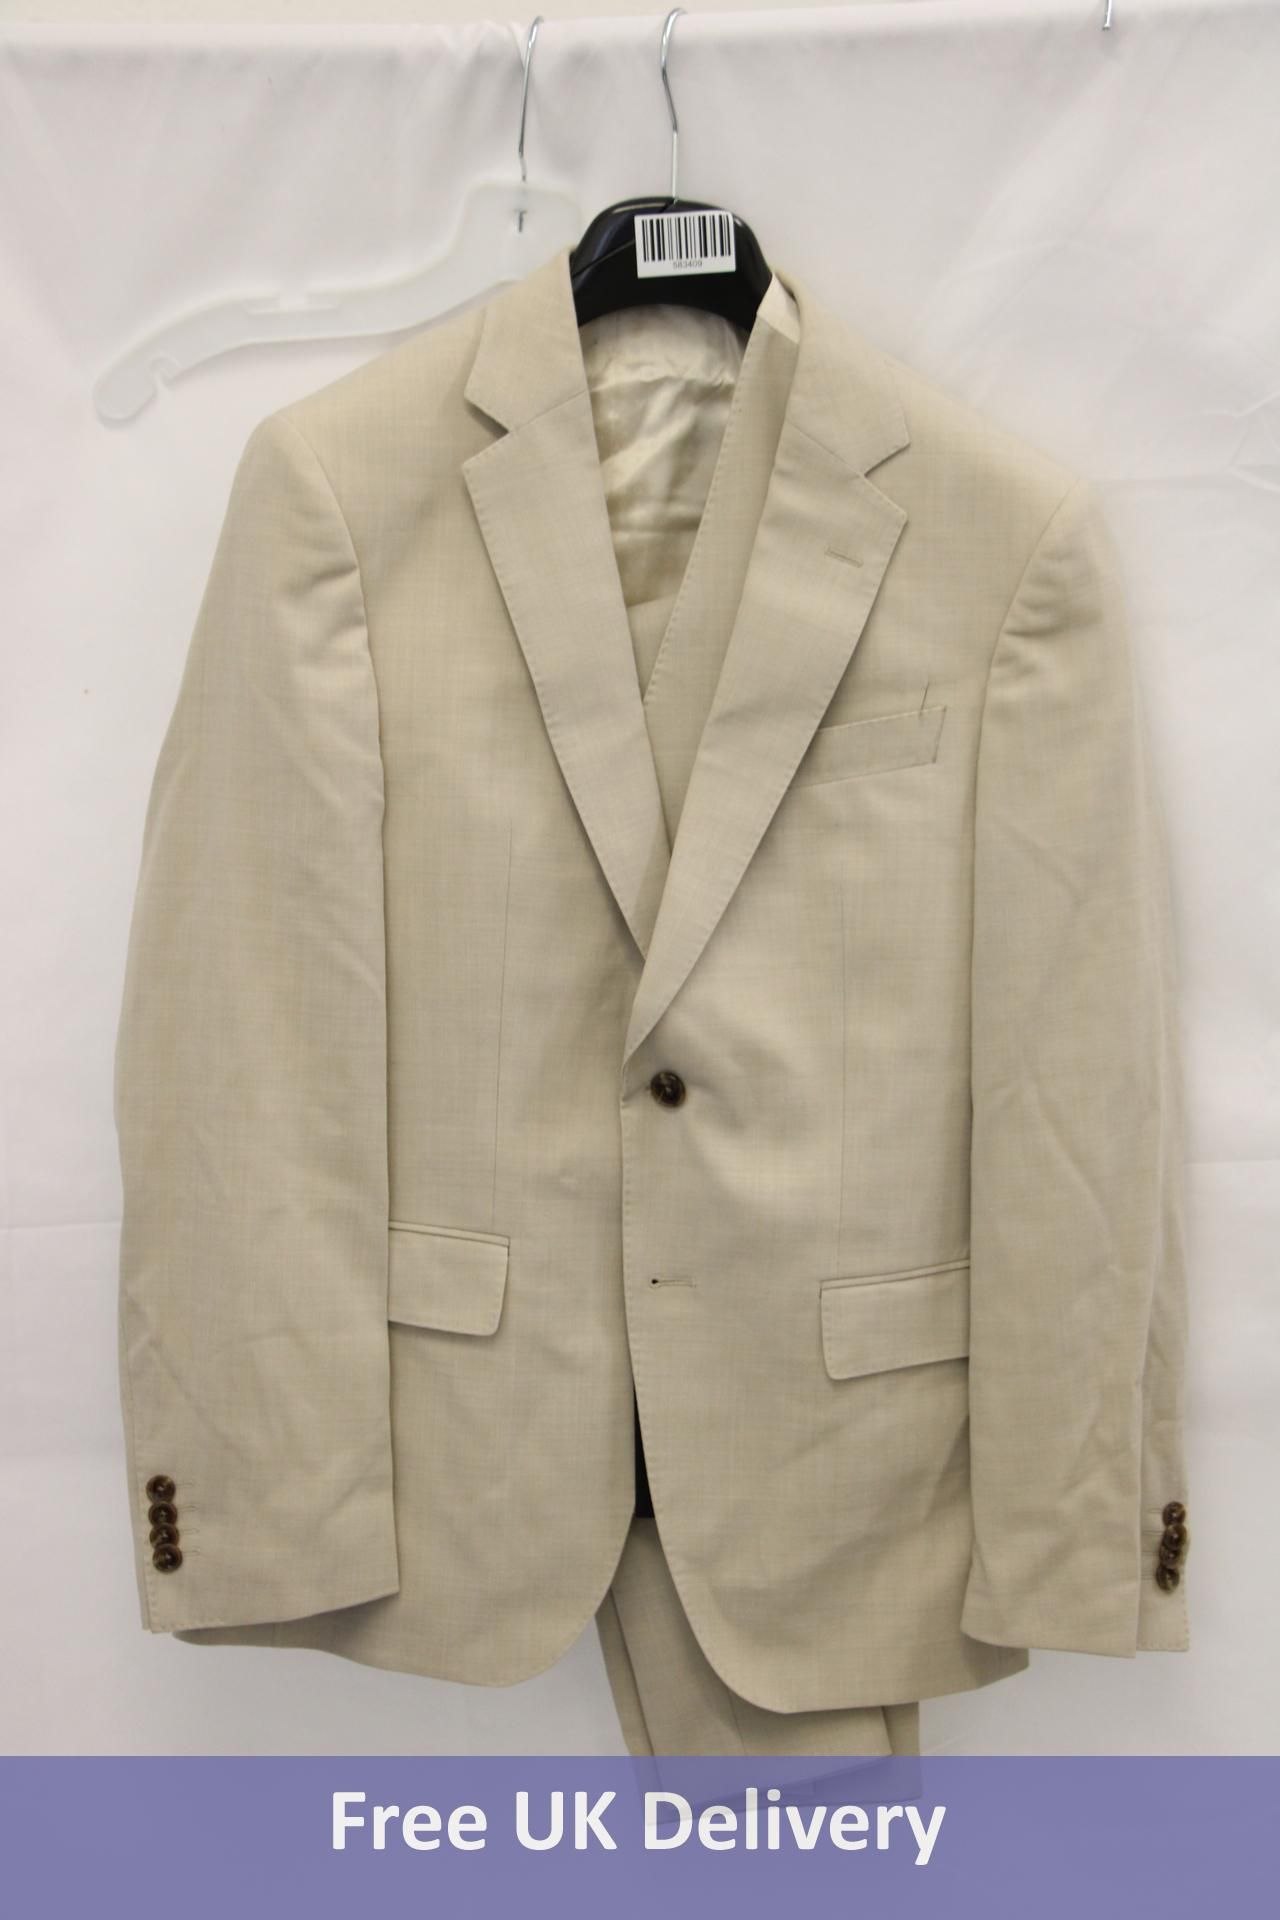 Hugo Boss Three-Piece Slim Fit Suit, Cream, Jacket Size 46, Trousers Size 23SR